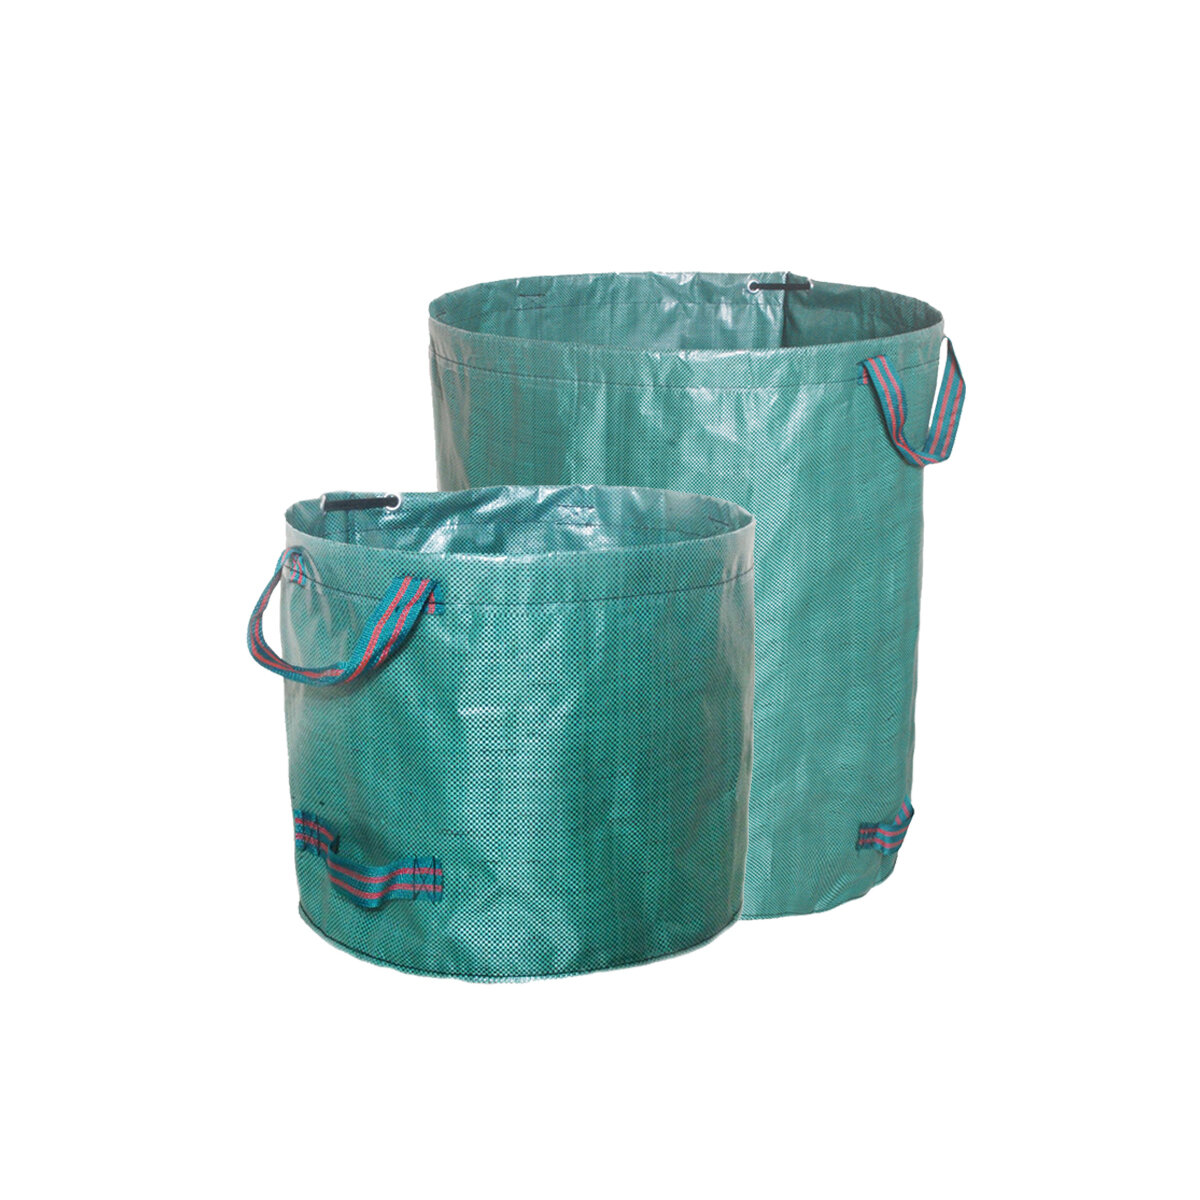 Garden Waste Bag Recycling Bins Reusable Waterproof Portable Rubbish Leaves Sack